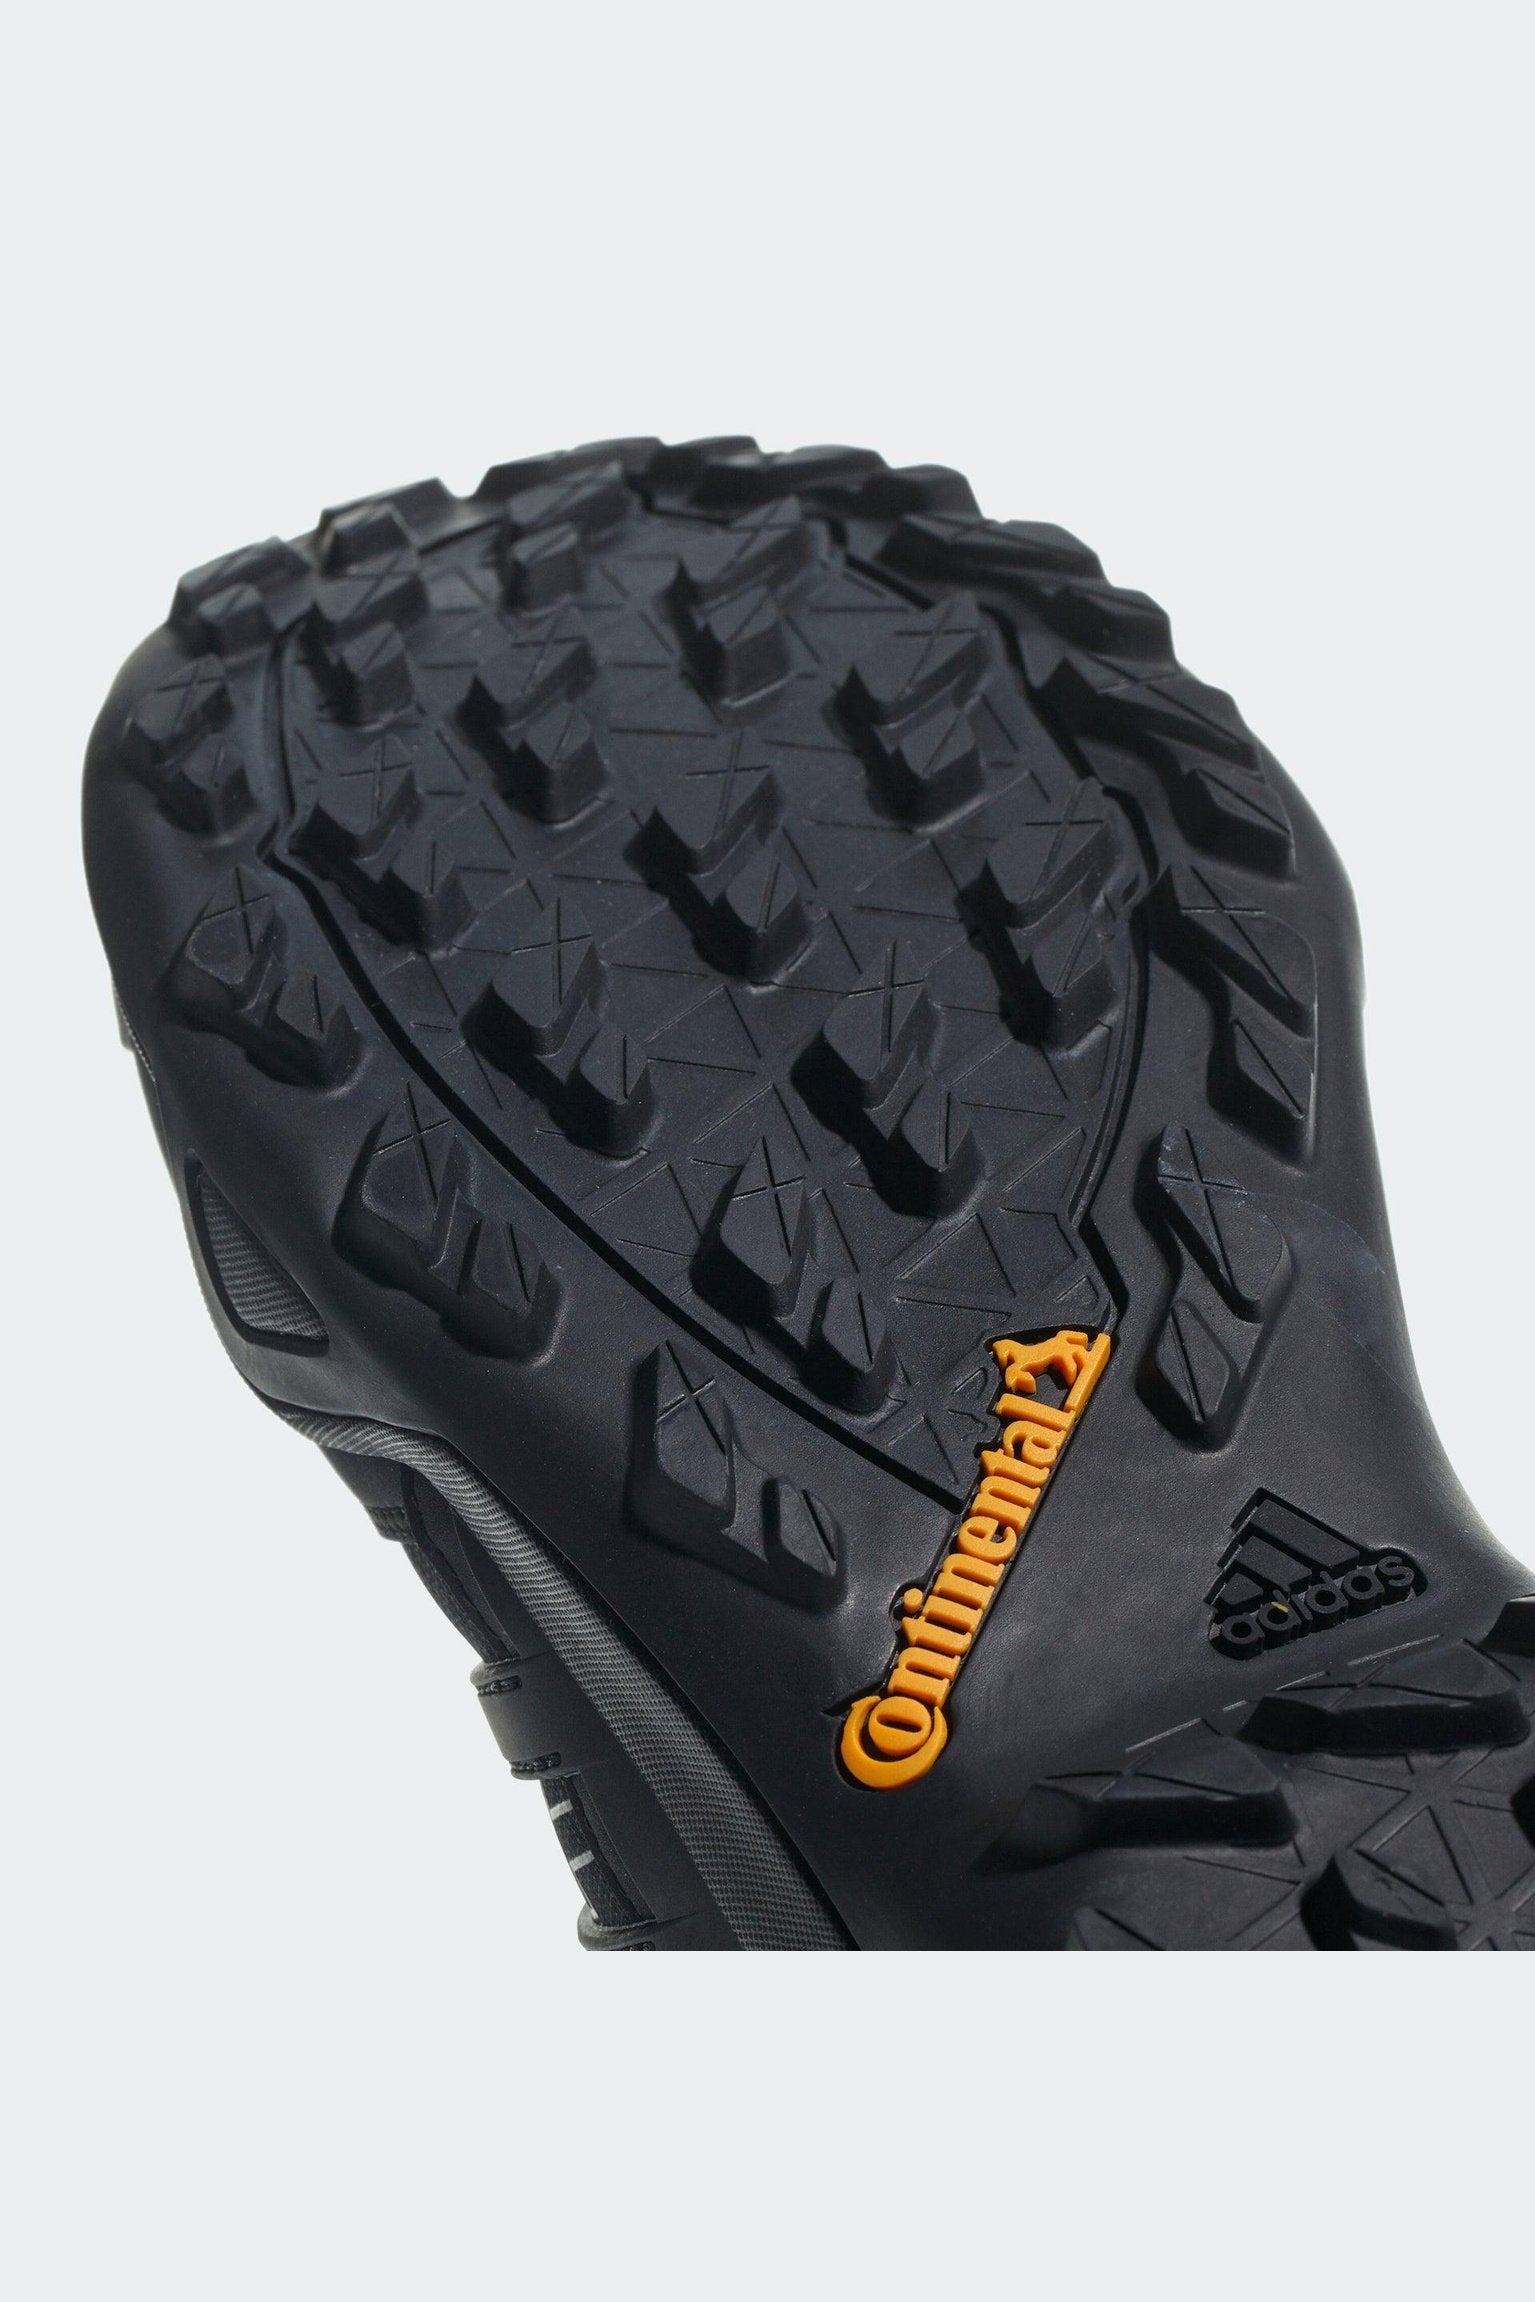 ADIDAS - נעלי ספורט TERREX SWIFT R2 בצבע שחור - MASHBIR//365